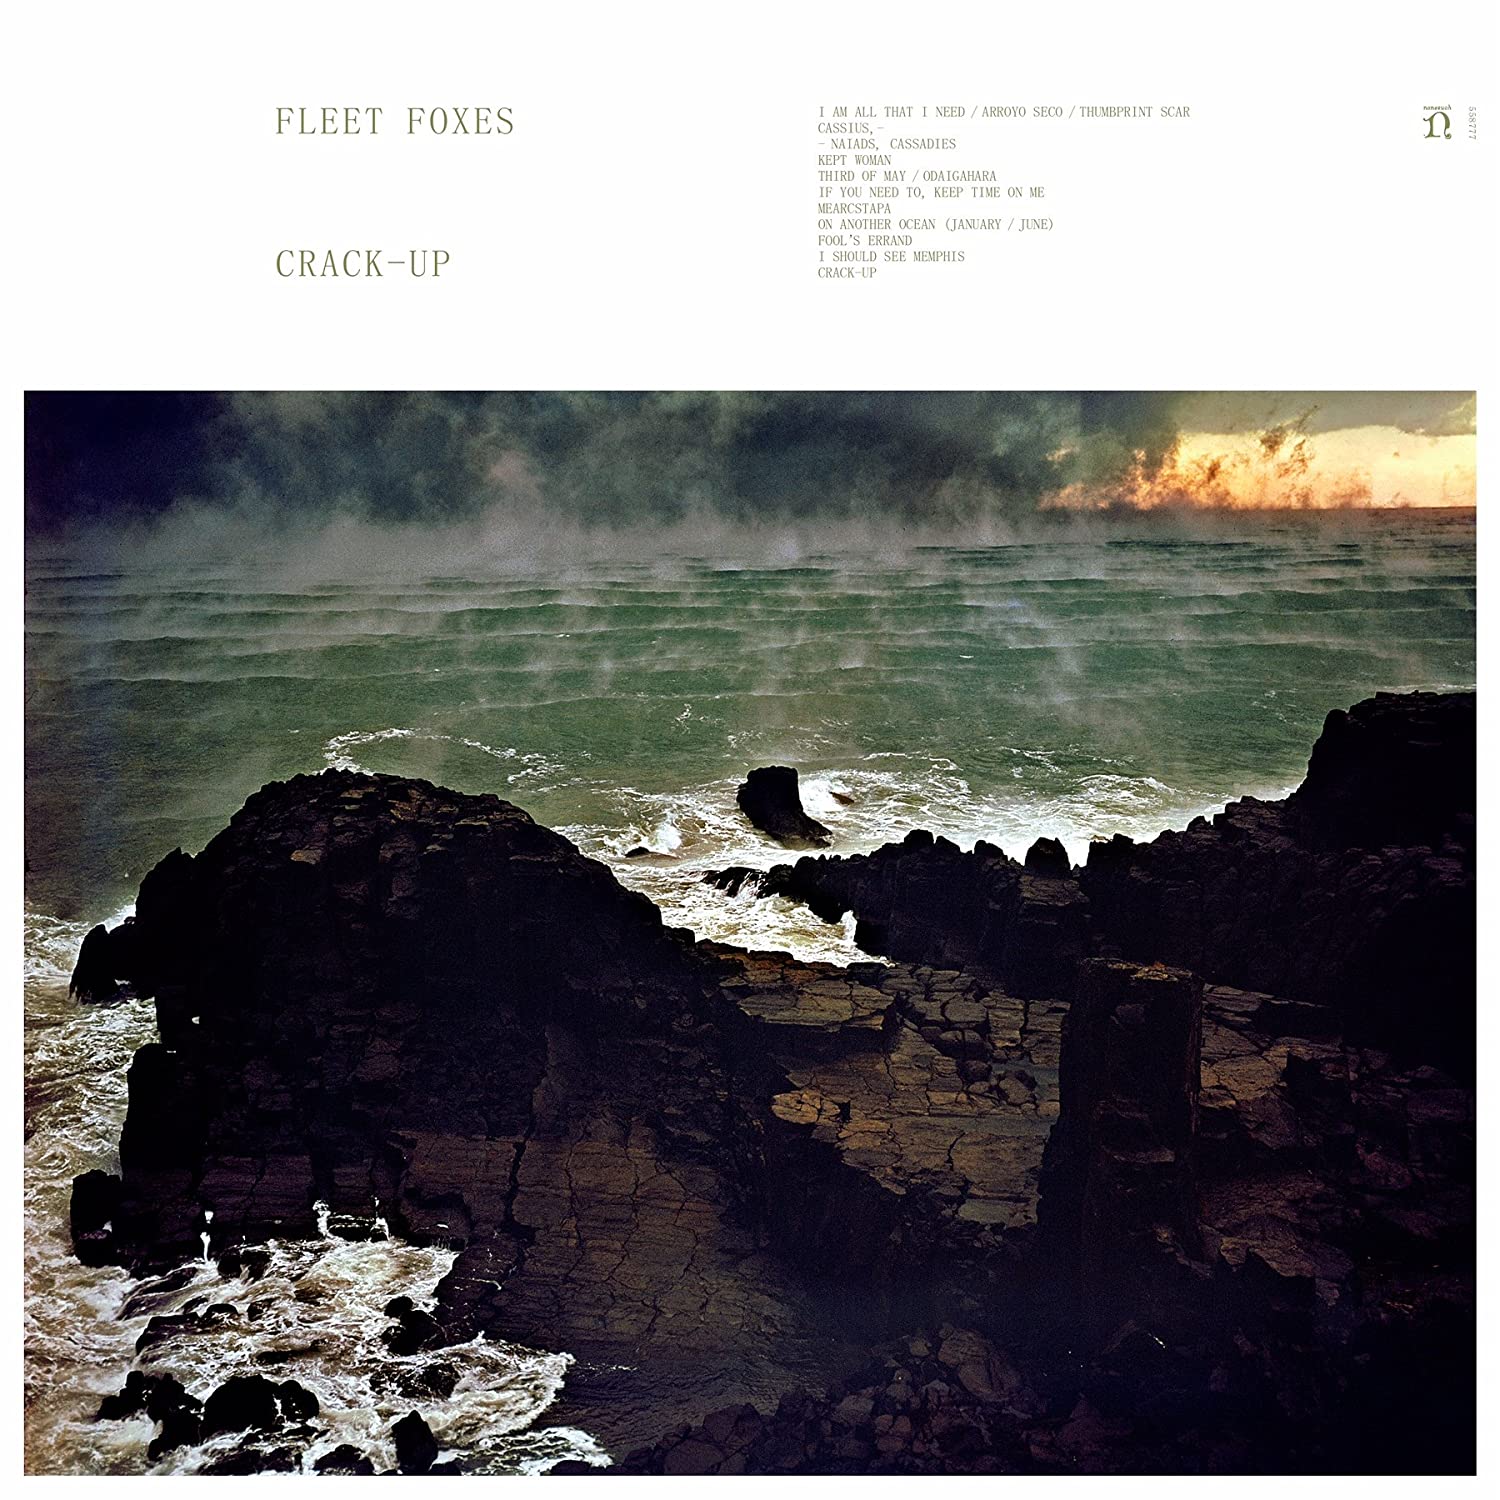 Fleet Foxes "Crack-Up" LP